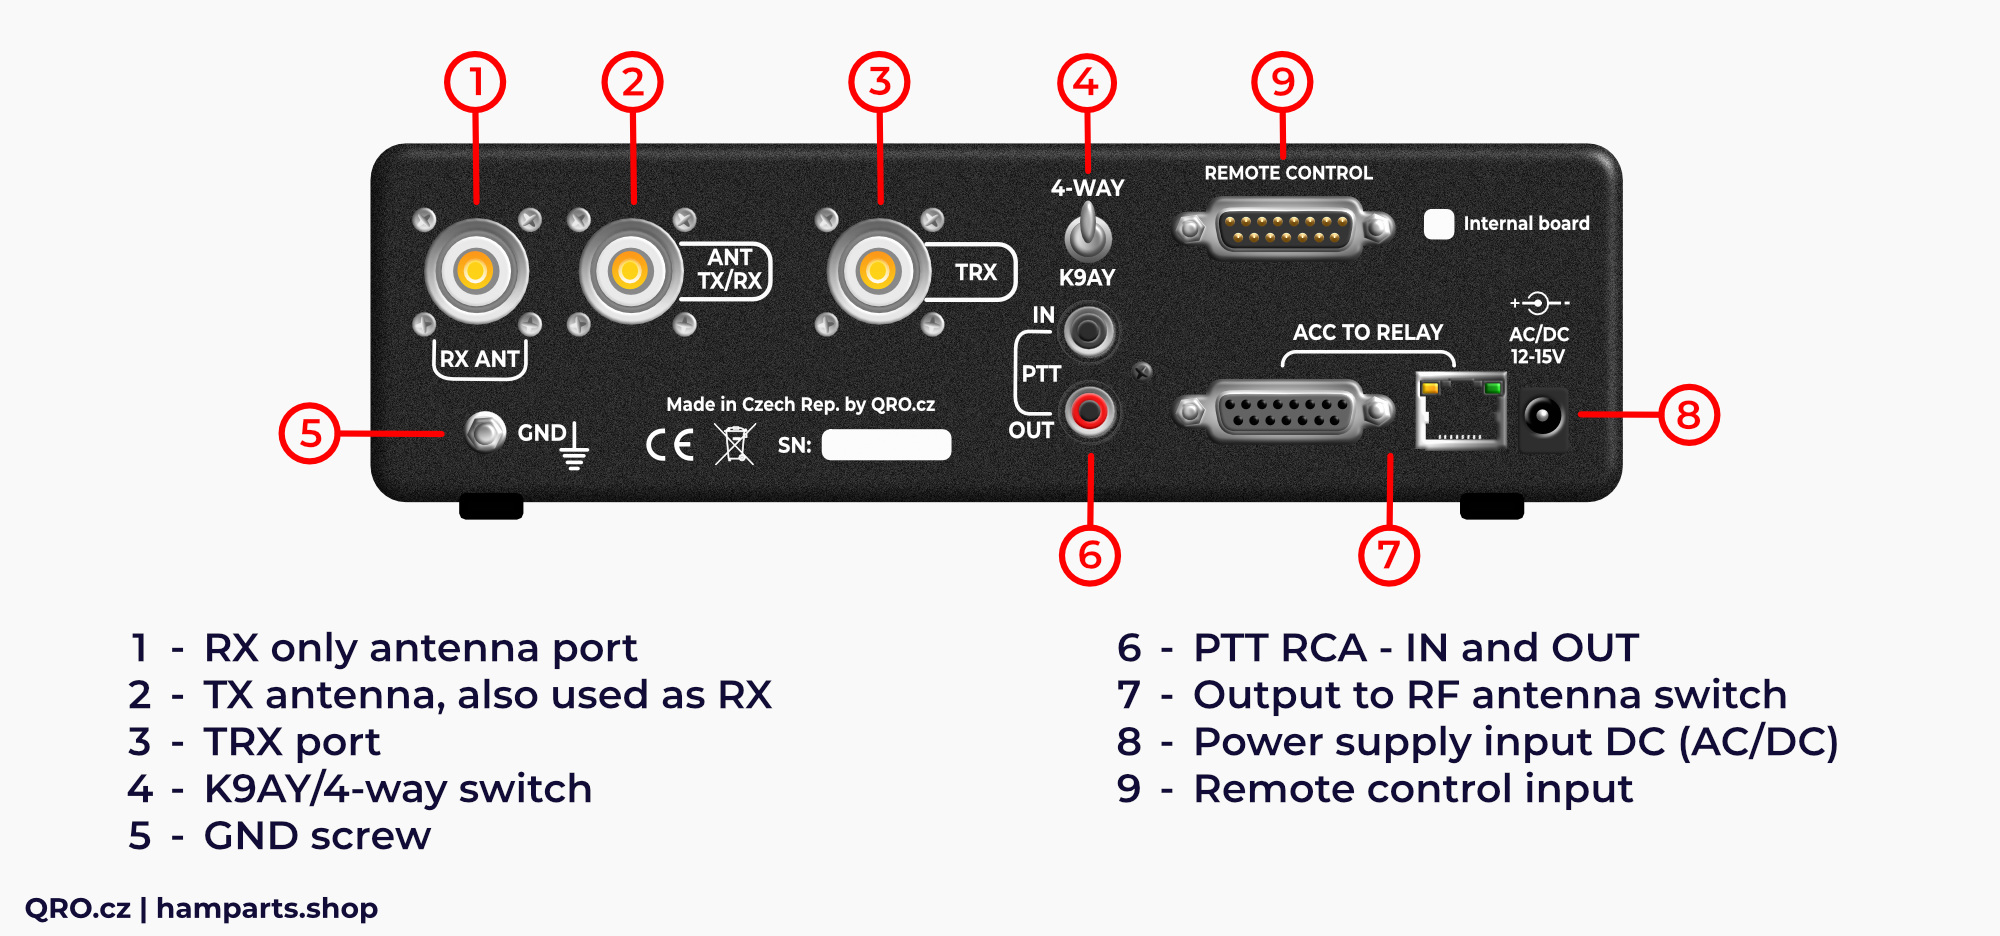 k9ay/4-way antenna switch controller rear panel description remote version qro.cz hamparts.shop